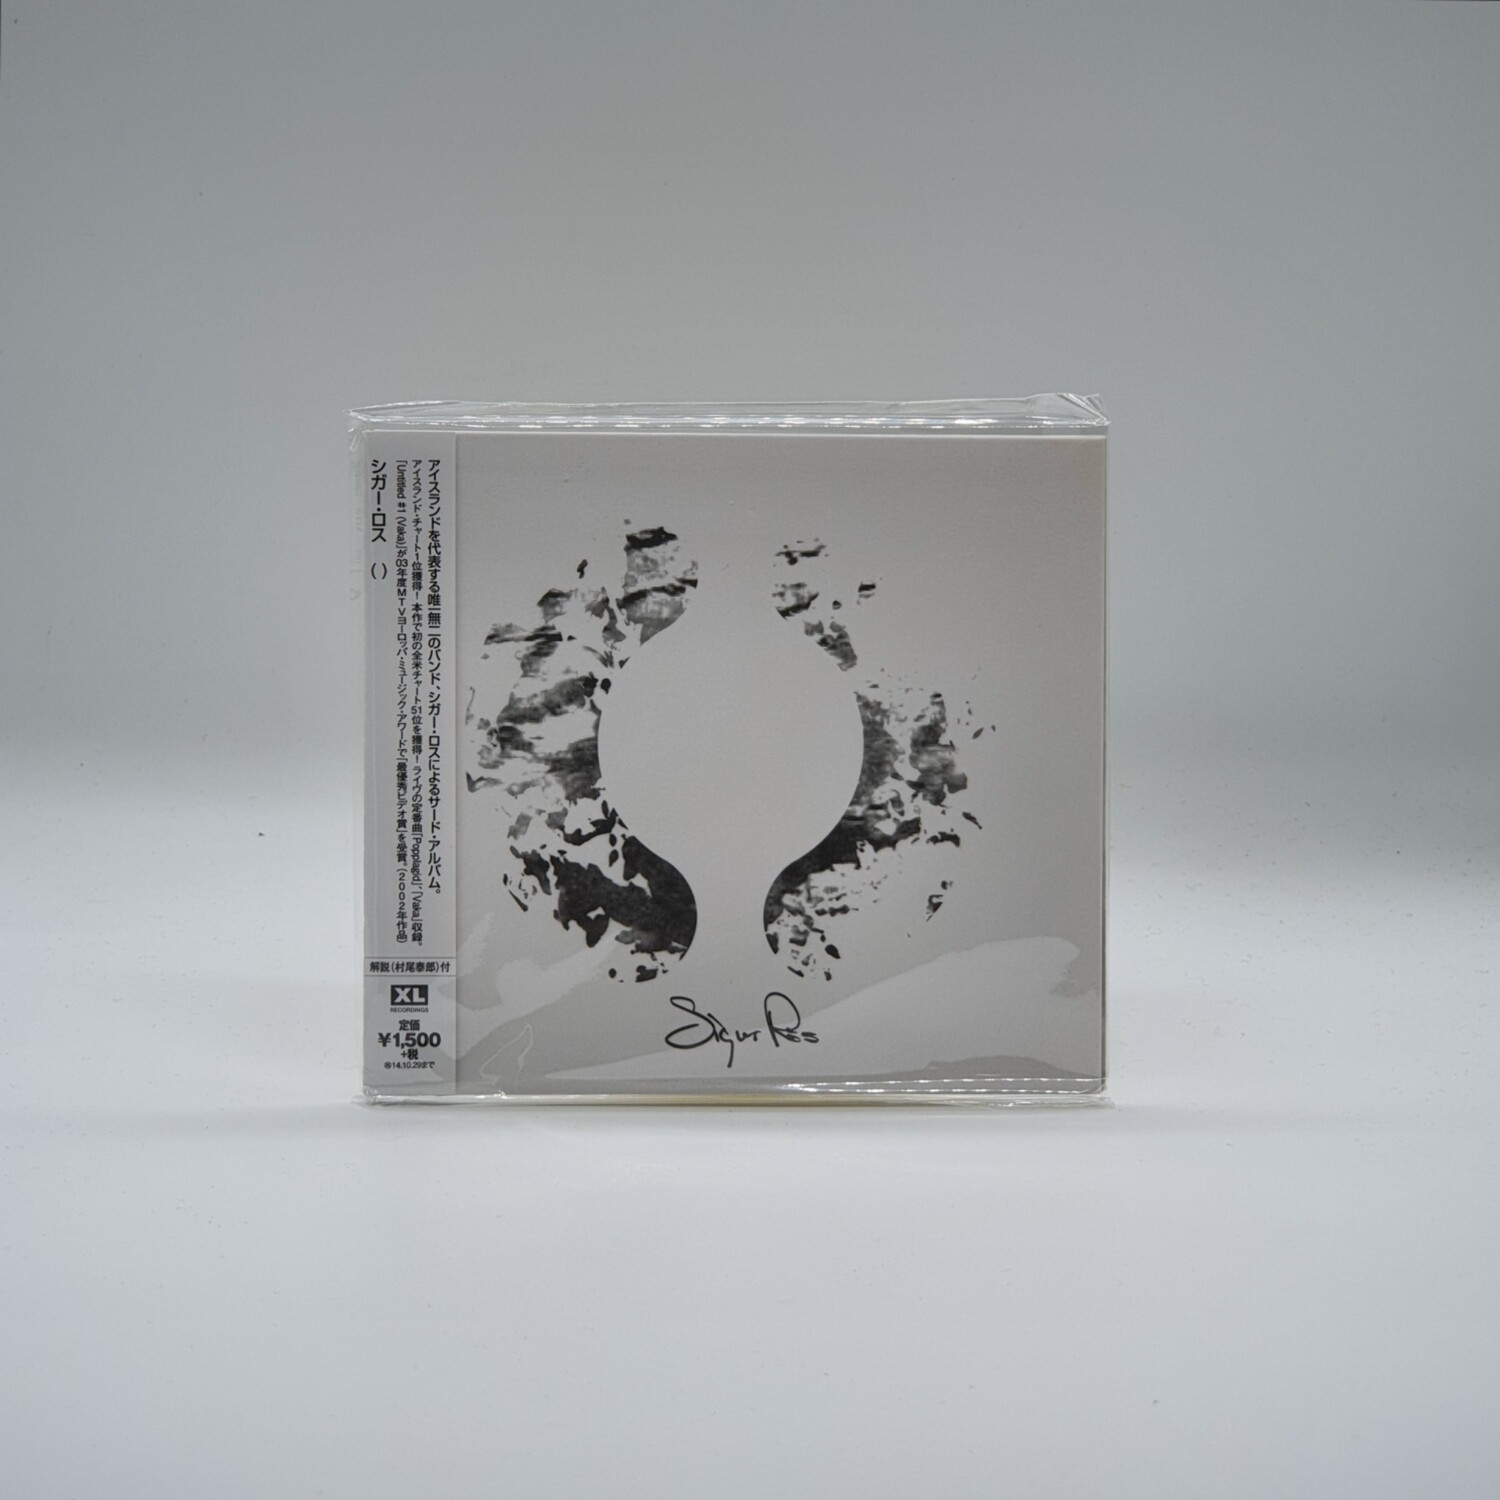 SIGUR ROS -( )- CD (JAPAN PRESS)